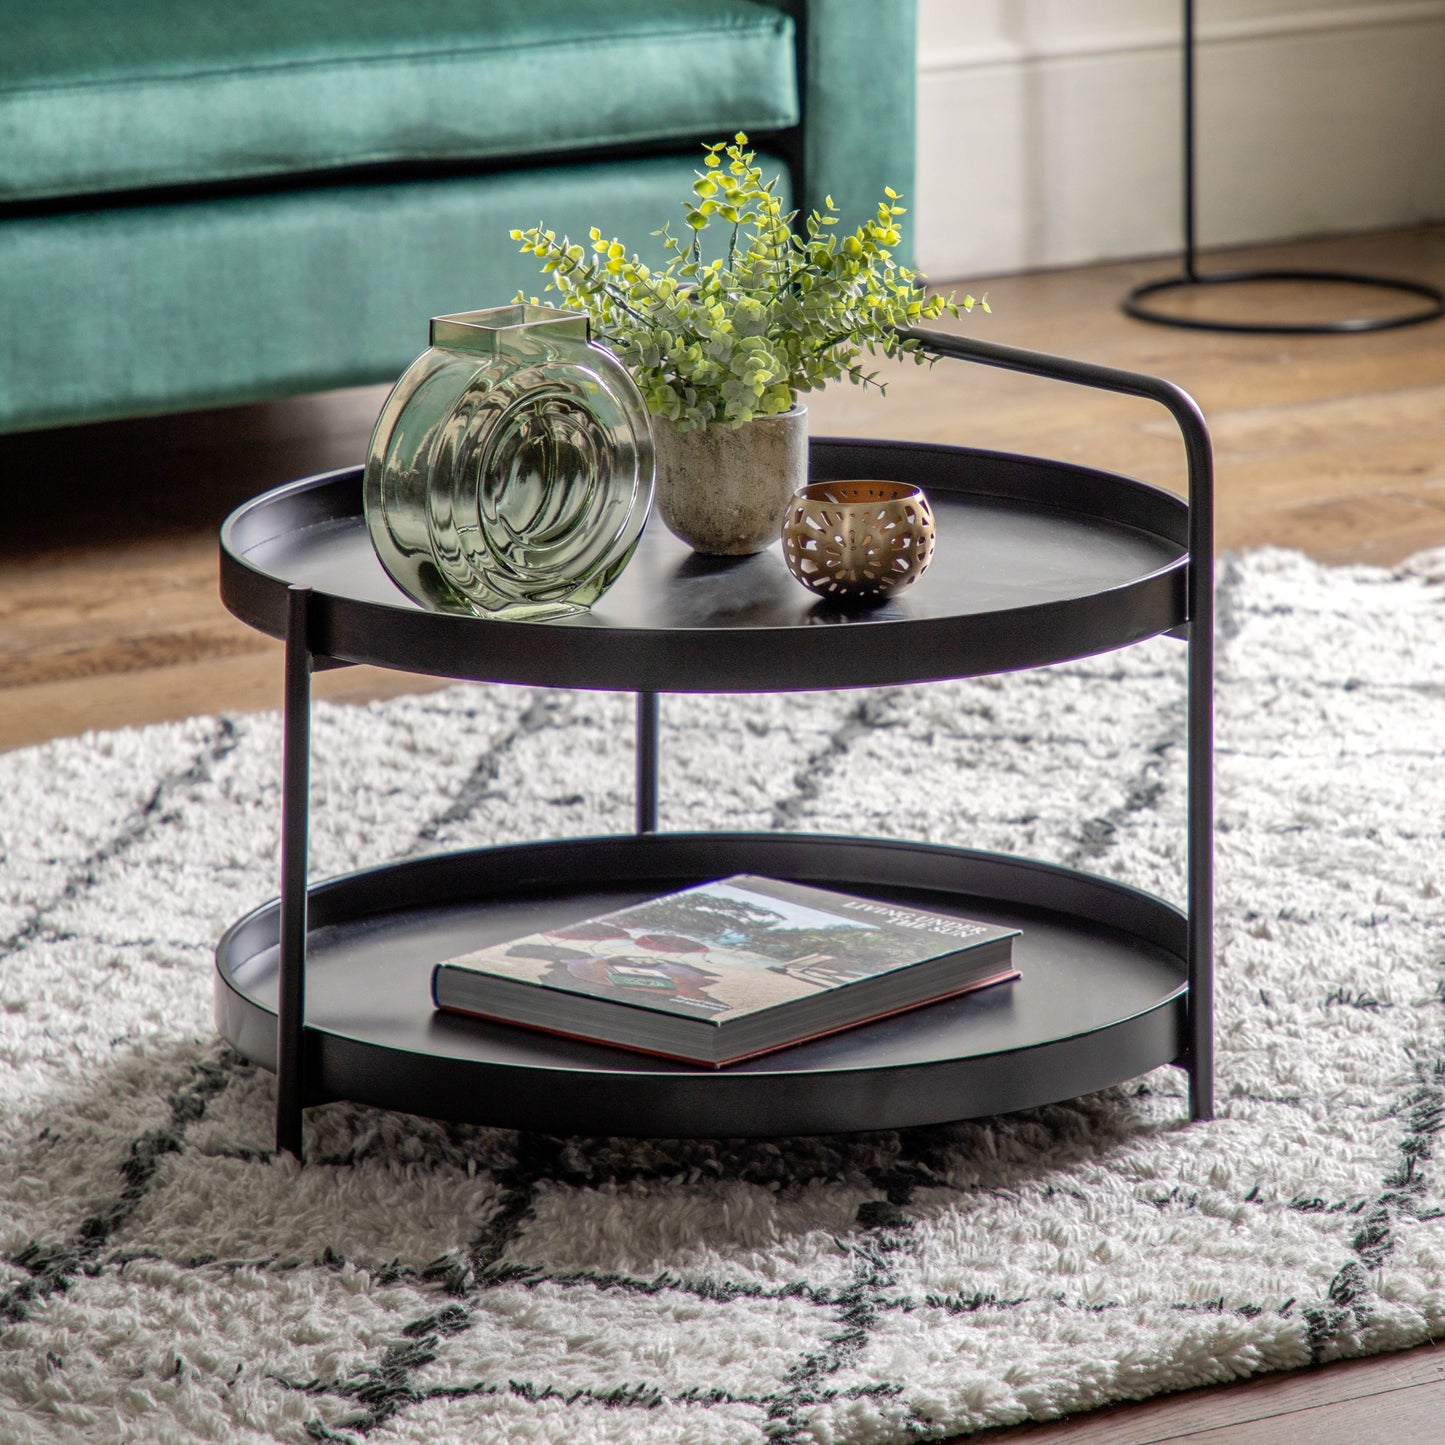 A Sennen Coffee Table Black 650x650x500mm by Kikiathome.co.uk enhances interior decor in a living room.